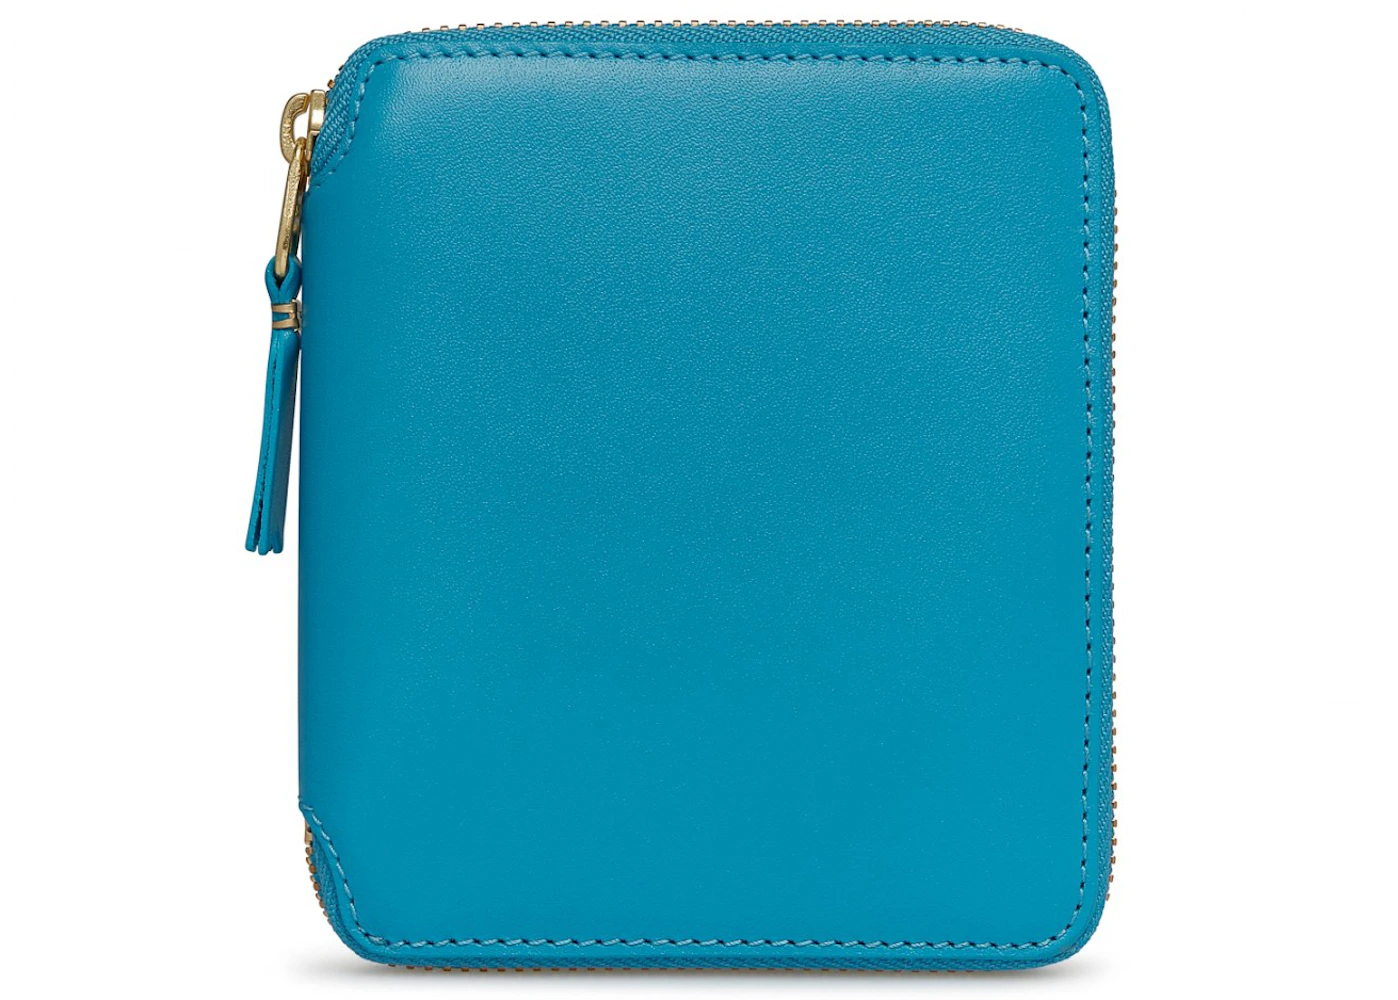 Comme des Garcons SA2100C Colour Plain Wallet Blue in Leather with Gold ...